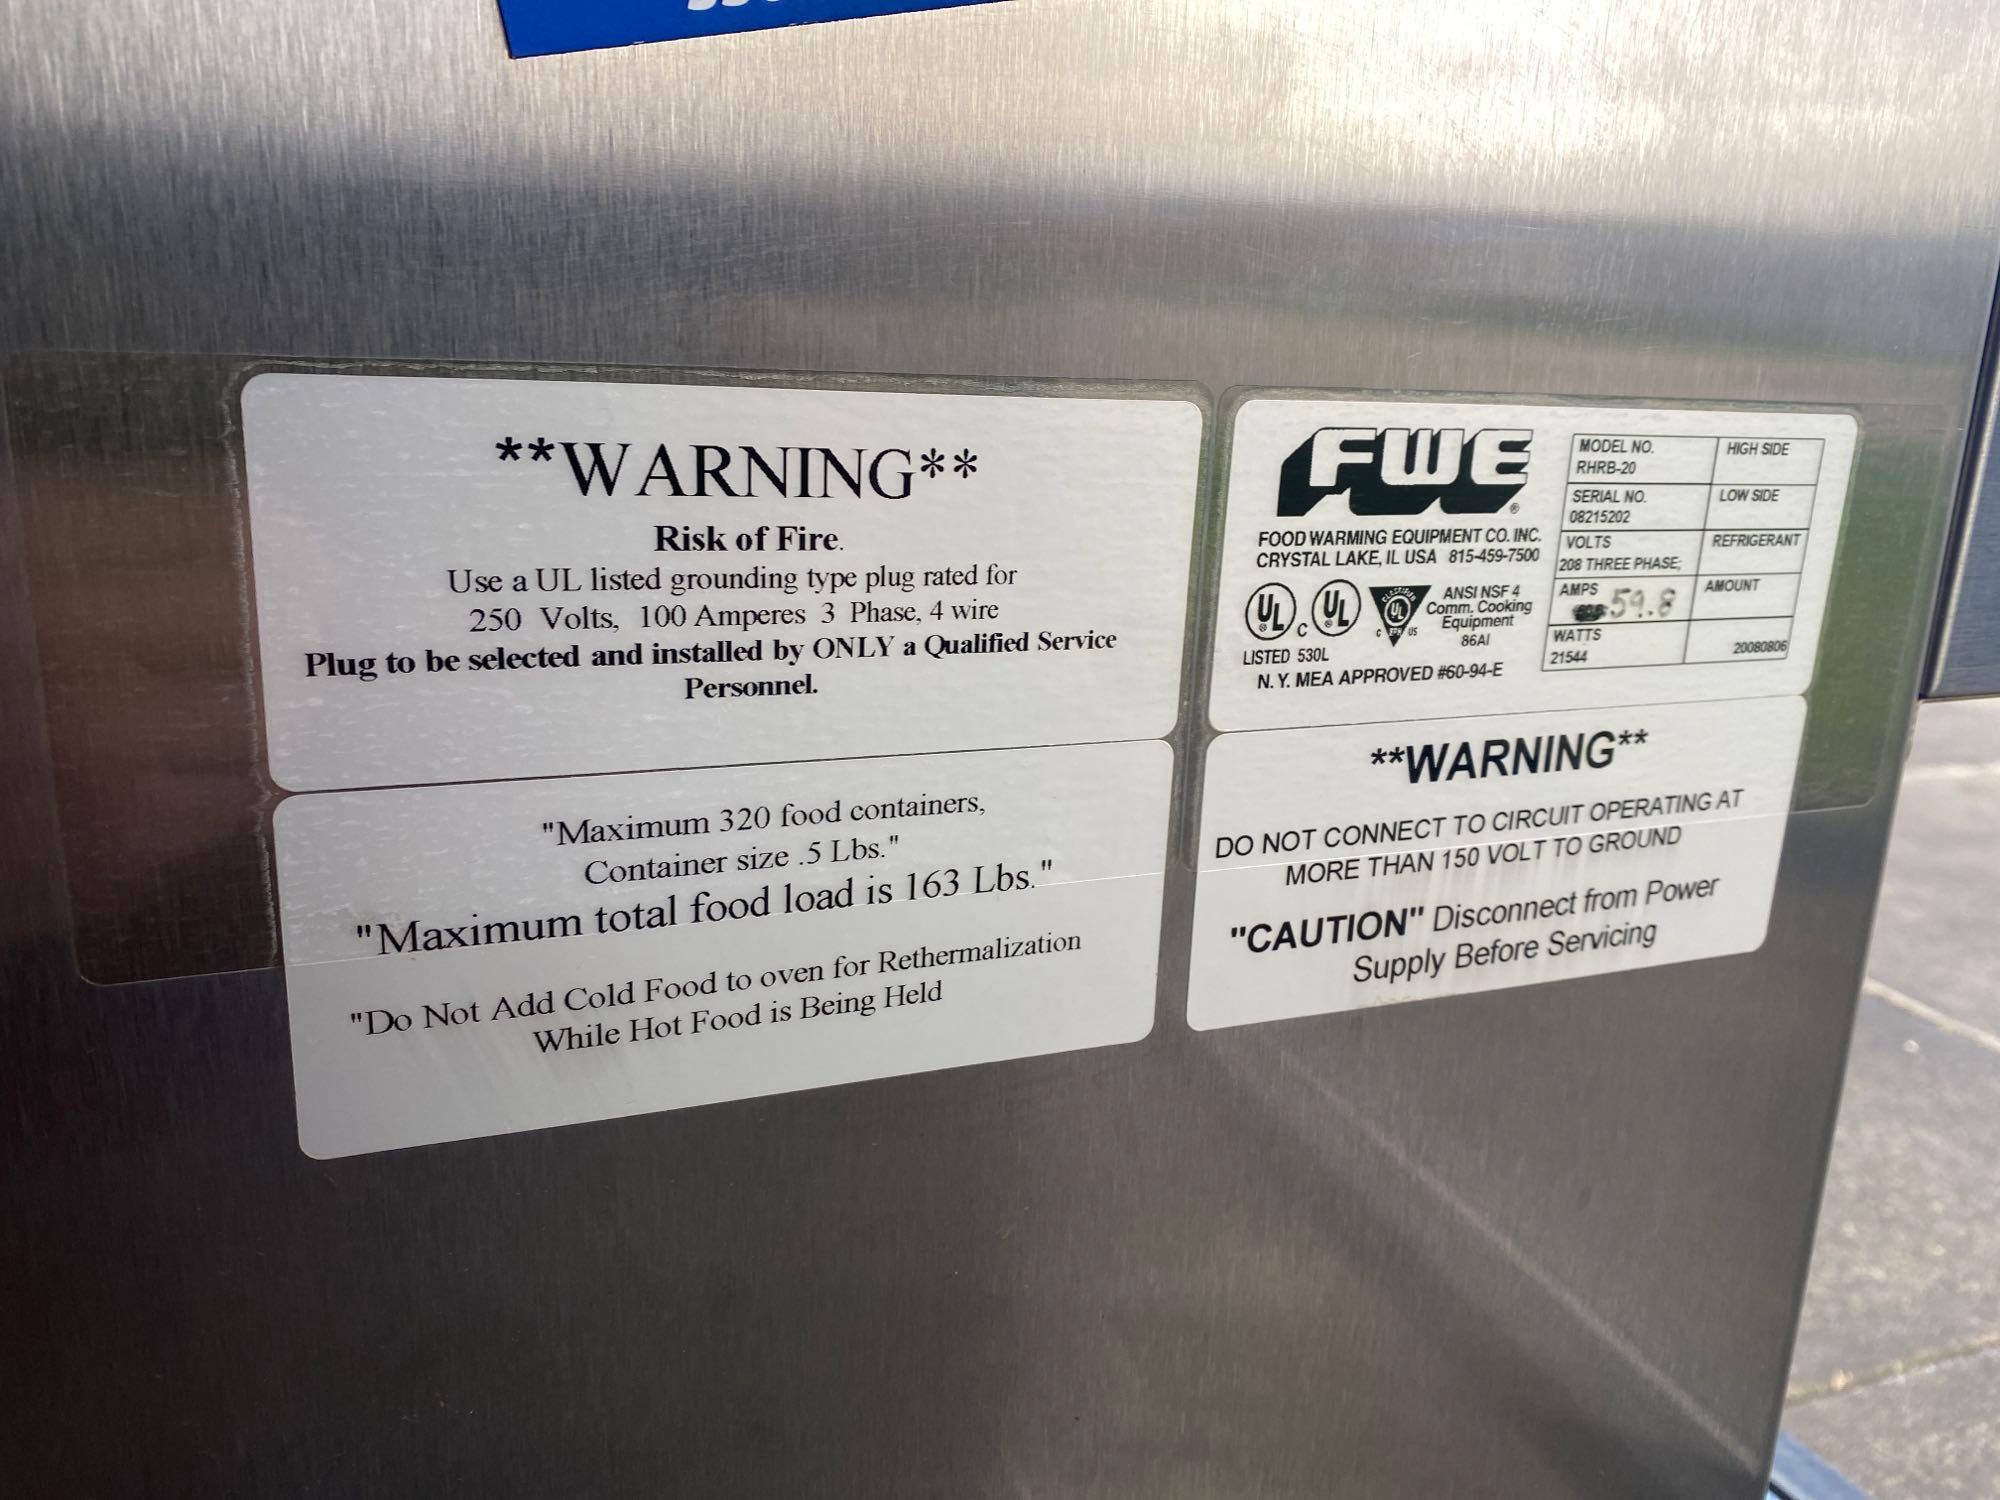 FWE Food Warming Equipment CO. INC